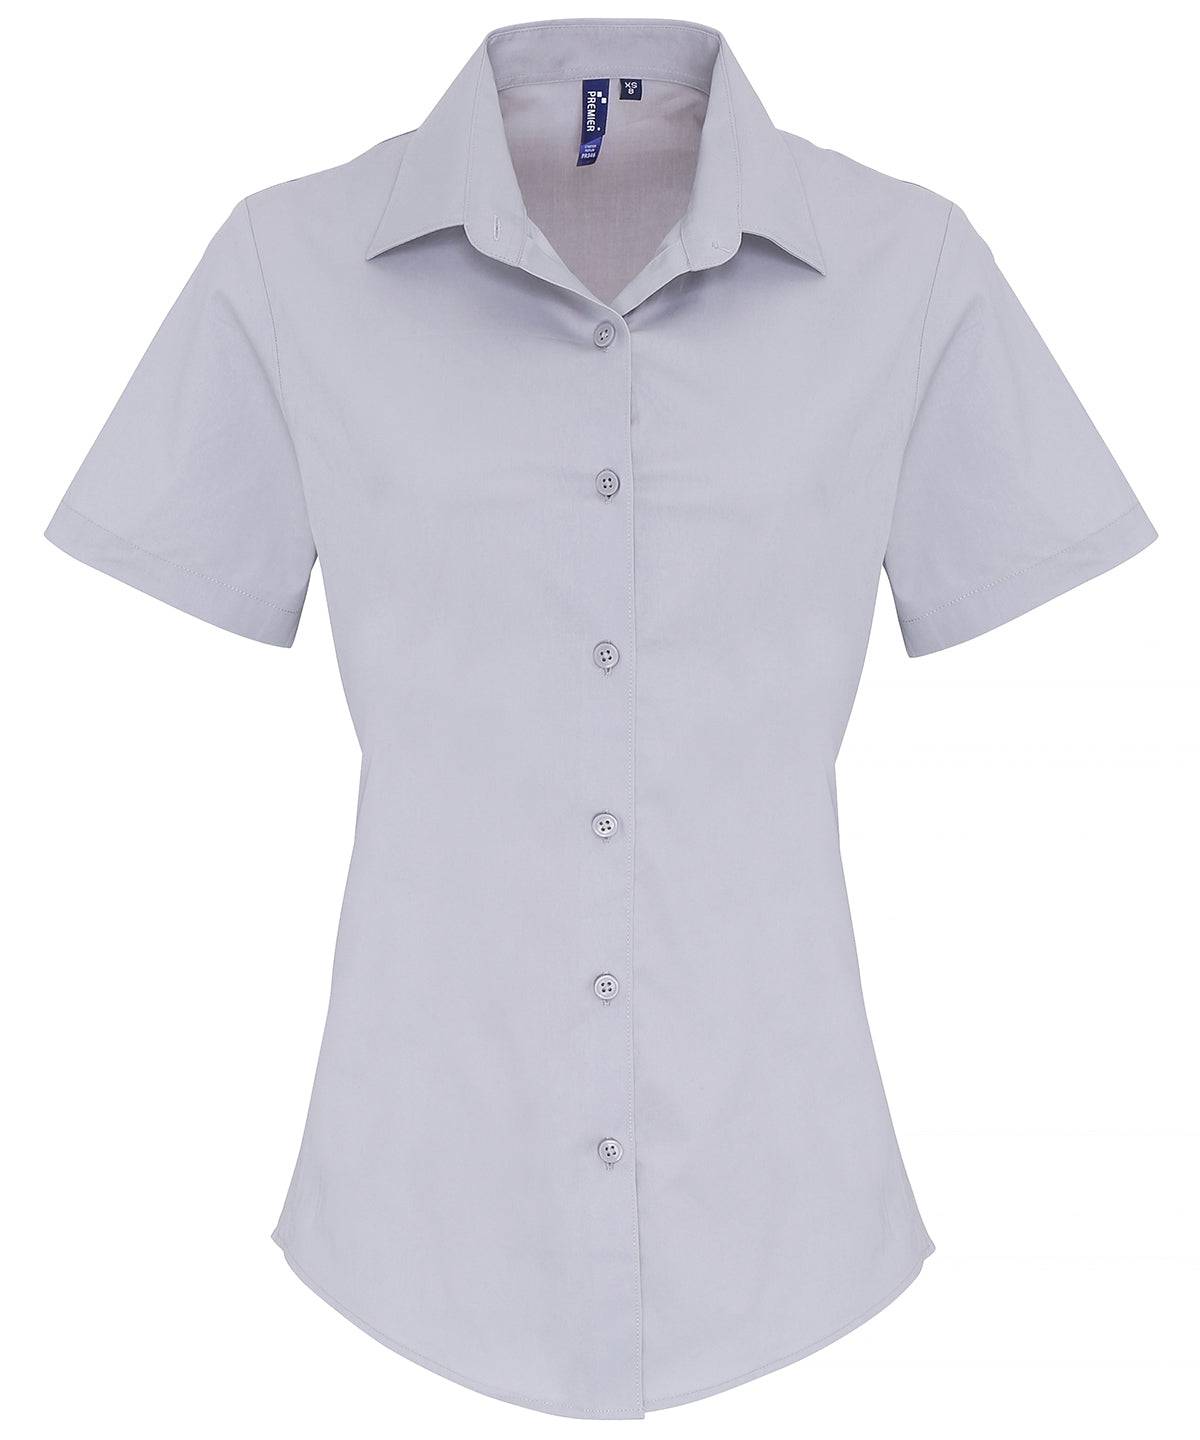 Silver - Women's stretch fit cotton poplin short sleeve blouse